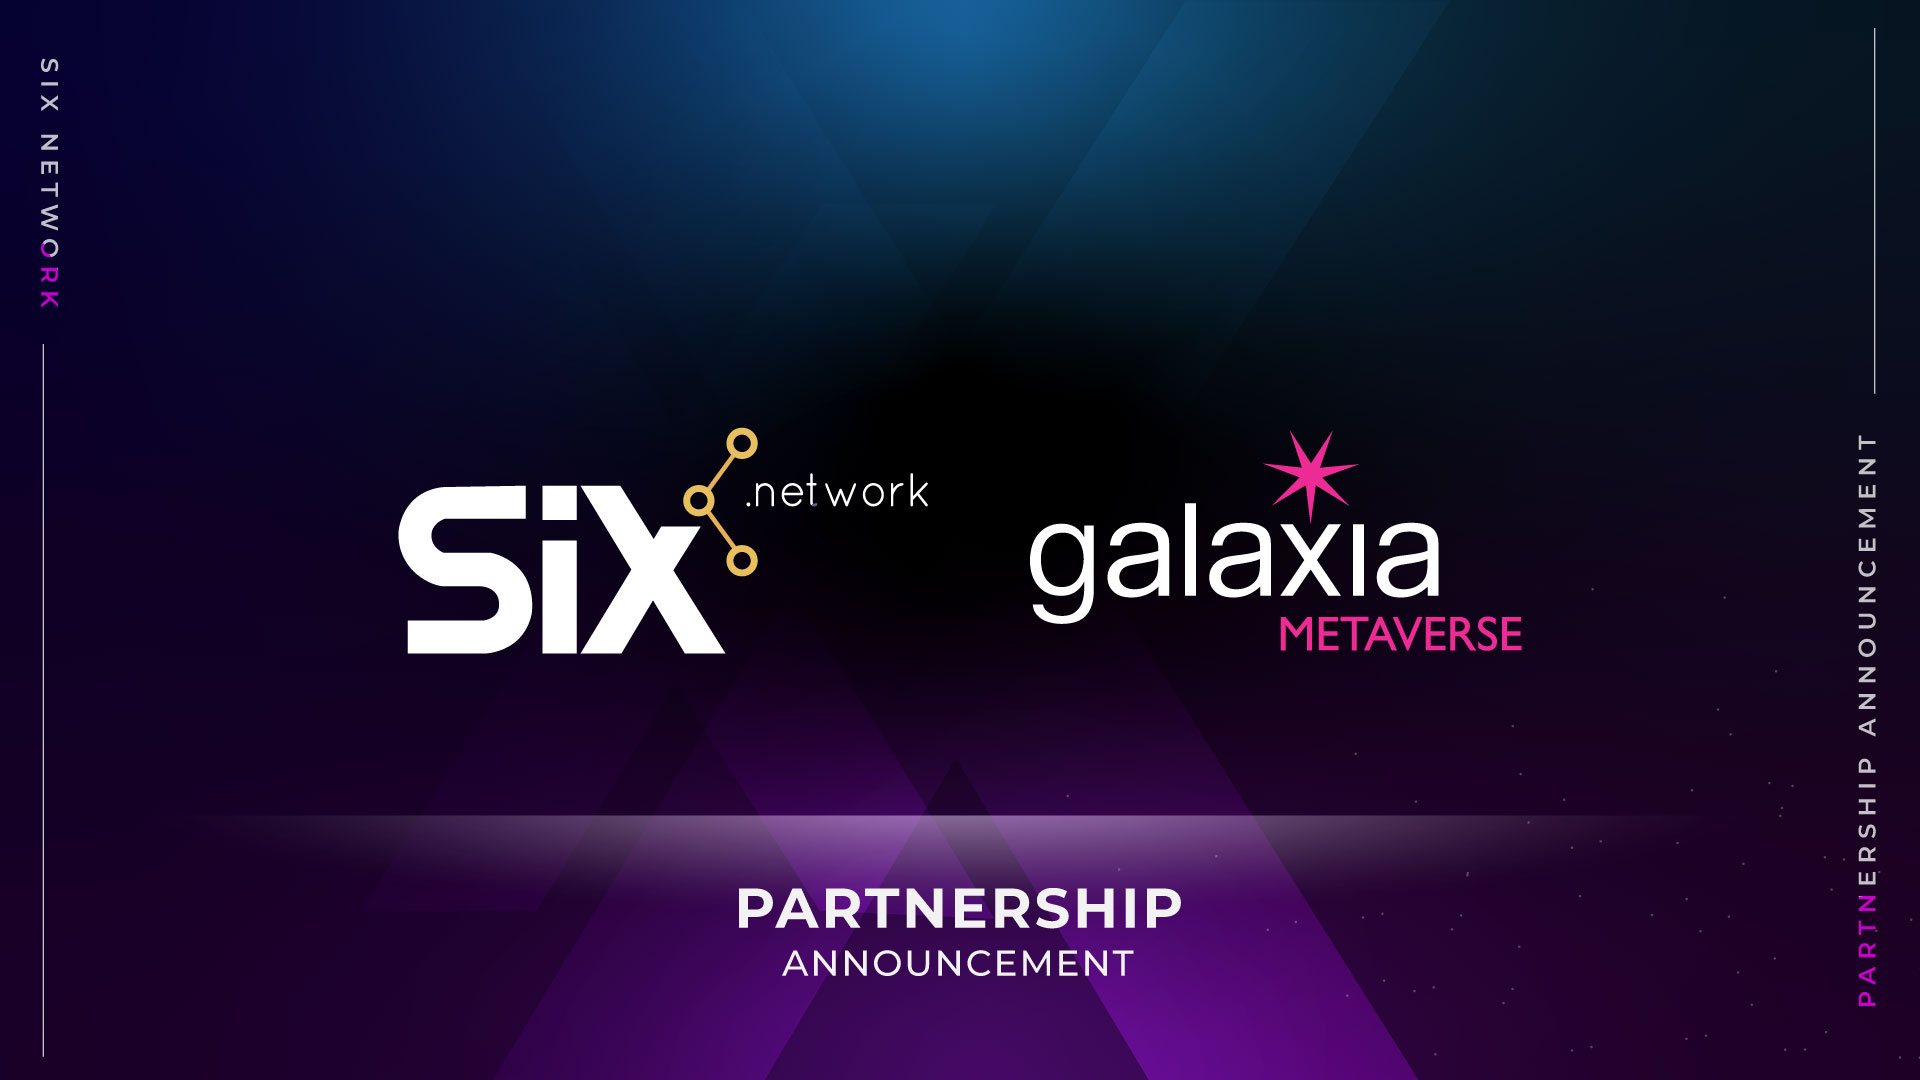 GalaxiaMetaverse และ SIX Network ได้ลงนามในข้อตกลงความร่วมมือทางธุรกิจ (MOU) เพื่อร่วมดำเนินการธุรกิจ Web3 ในระดับโลก